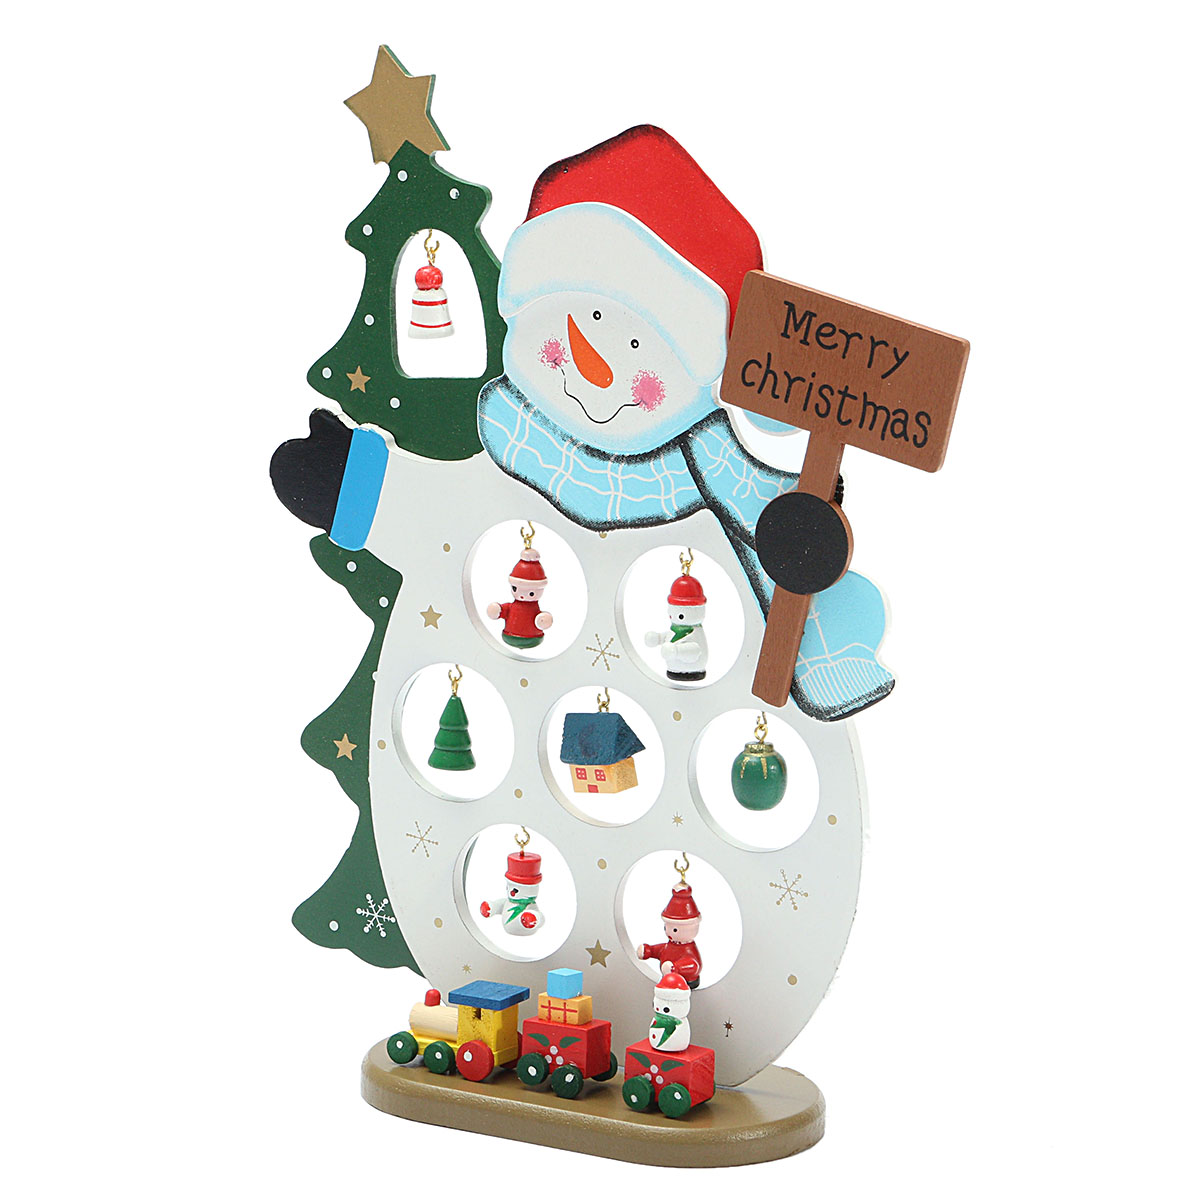 Wooden-Christmas-Snowman-Ornament-Christmas-Decoration-Pendant-Desktop-Decoration-Gift-for-Children--1220161-8